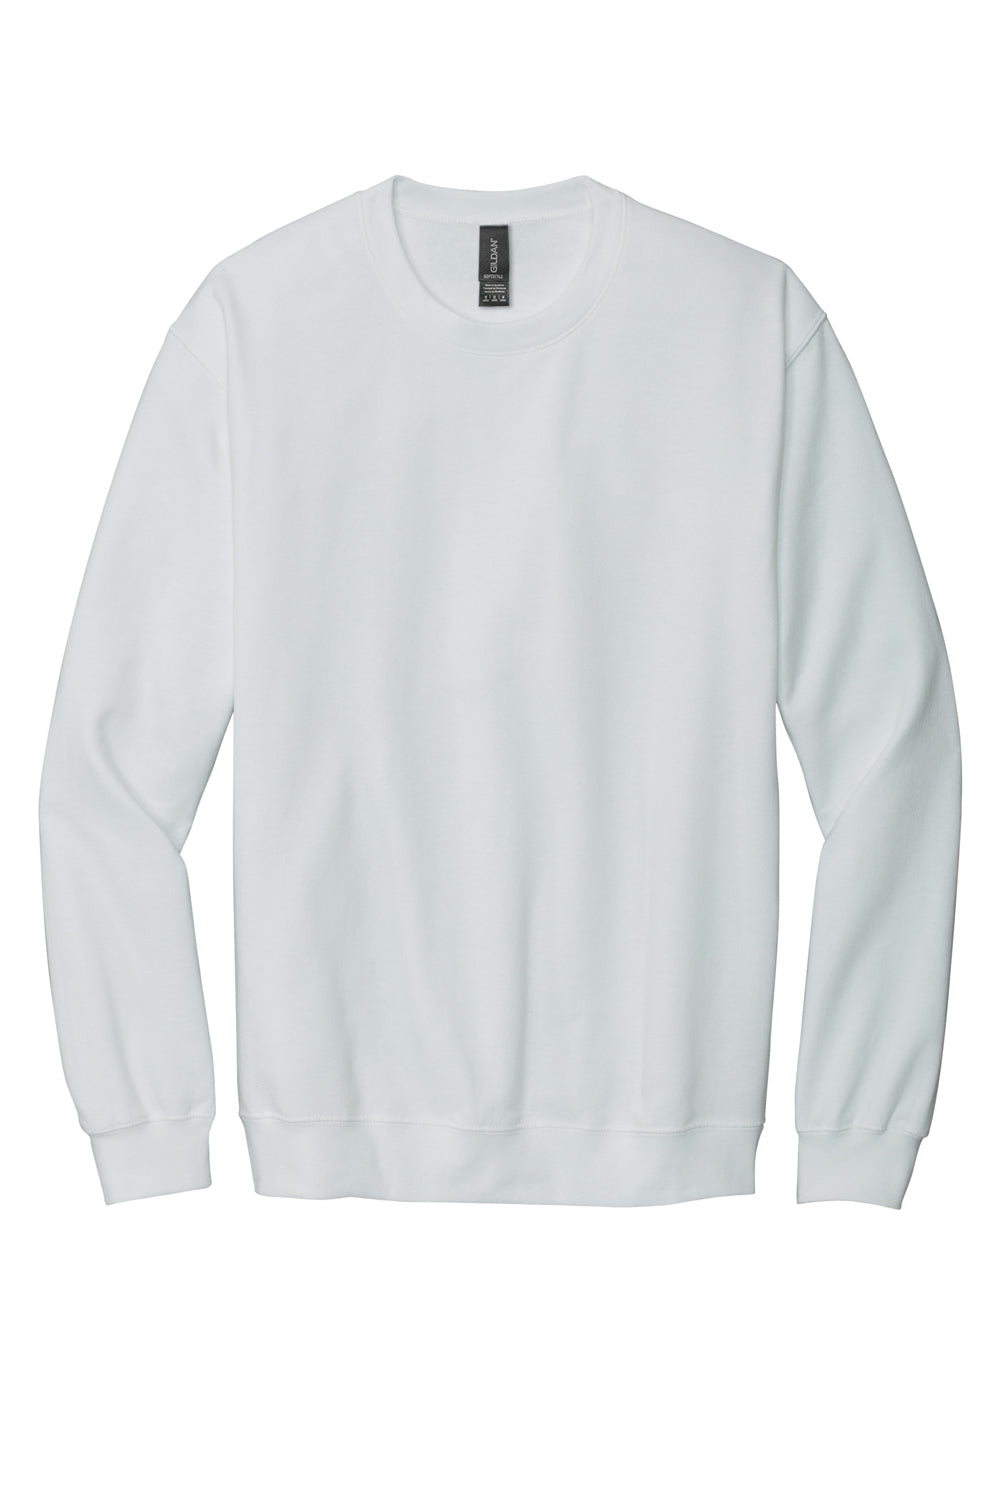 Gildan SF000 Softstyle Crewneck Sweatshirt White Flat Front